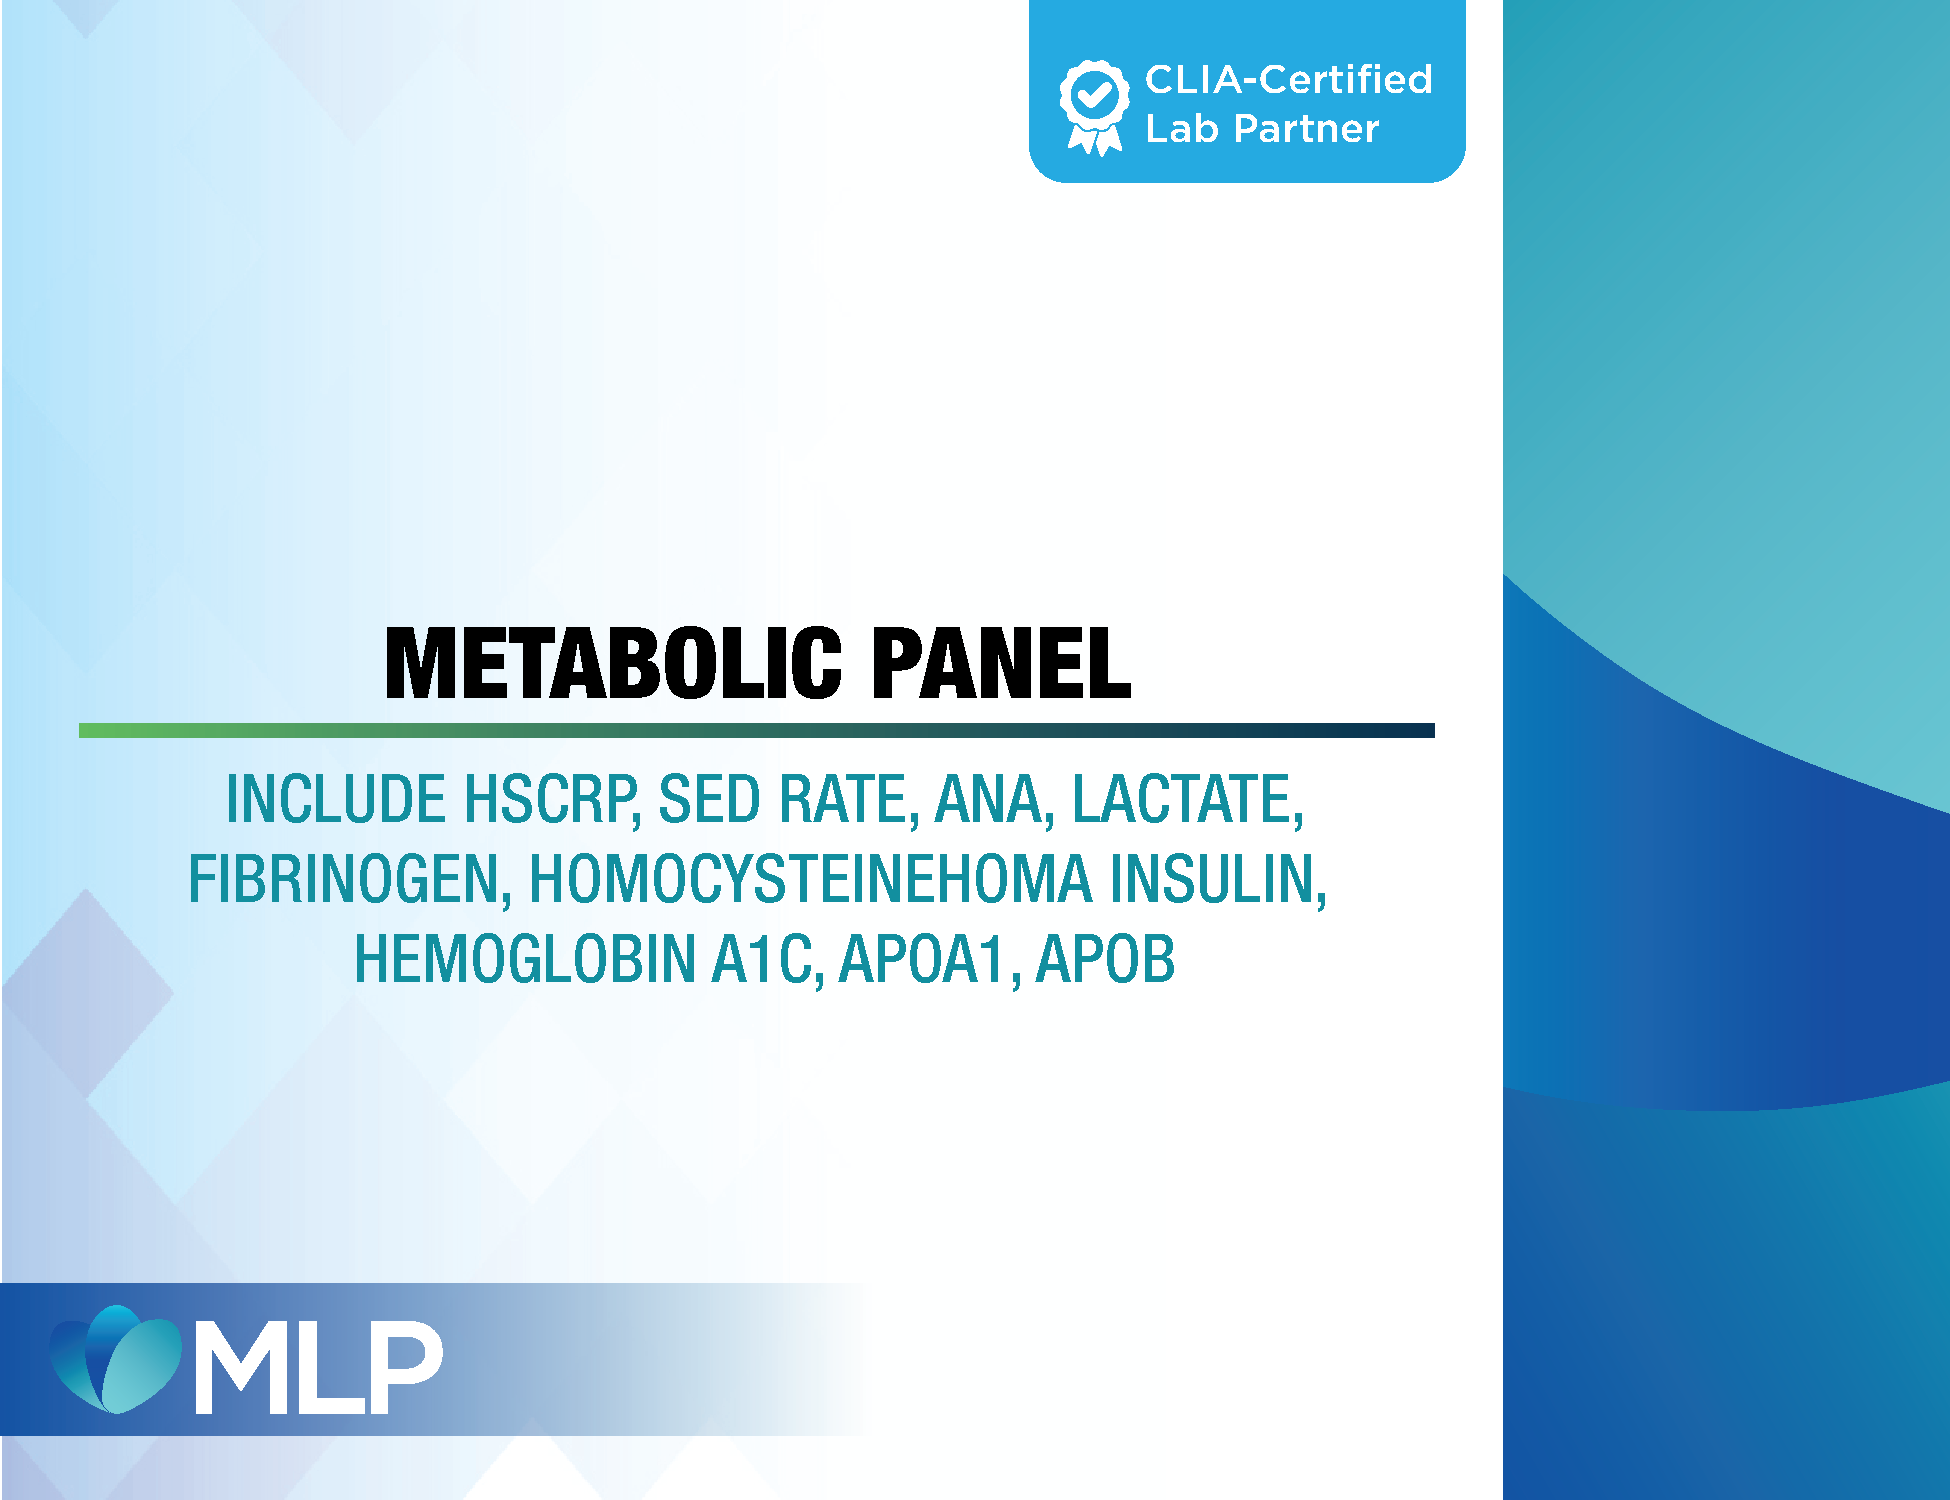 Metabolic Panel - include hsCRP, Sed rate, ANA, Lactate, Fibrinogen, Homocysteine HOMA Insulin, Hemoglobin A1C, ApoA1, ApoB